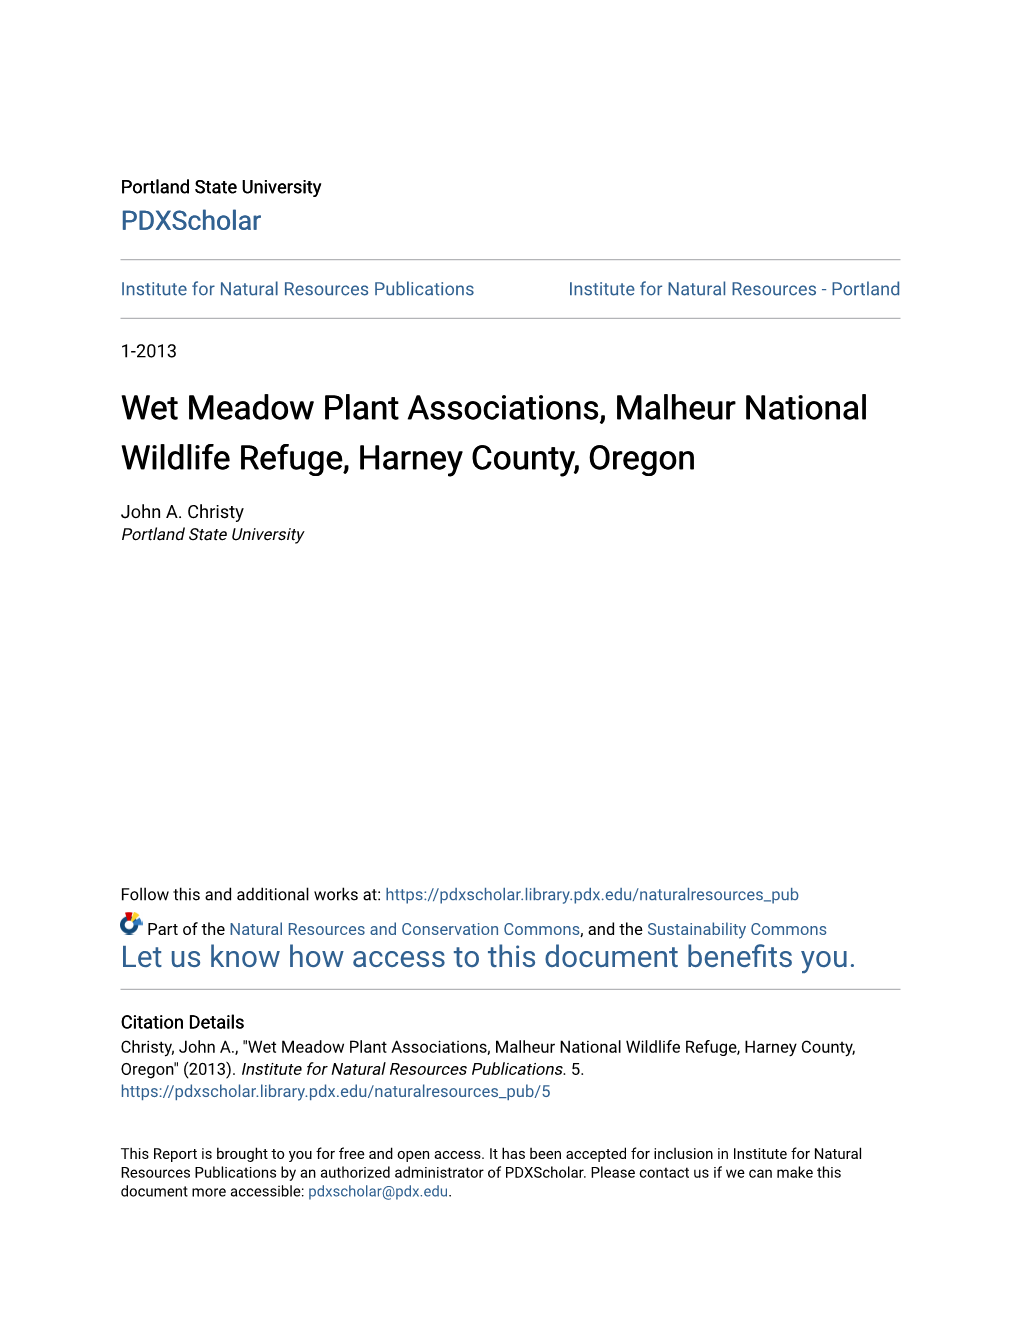 Wet Meadow Plant Associations, Malheur National Wildlife Refuge, Harney County, Oregon